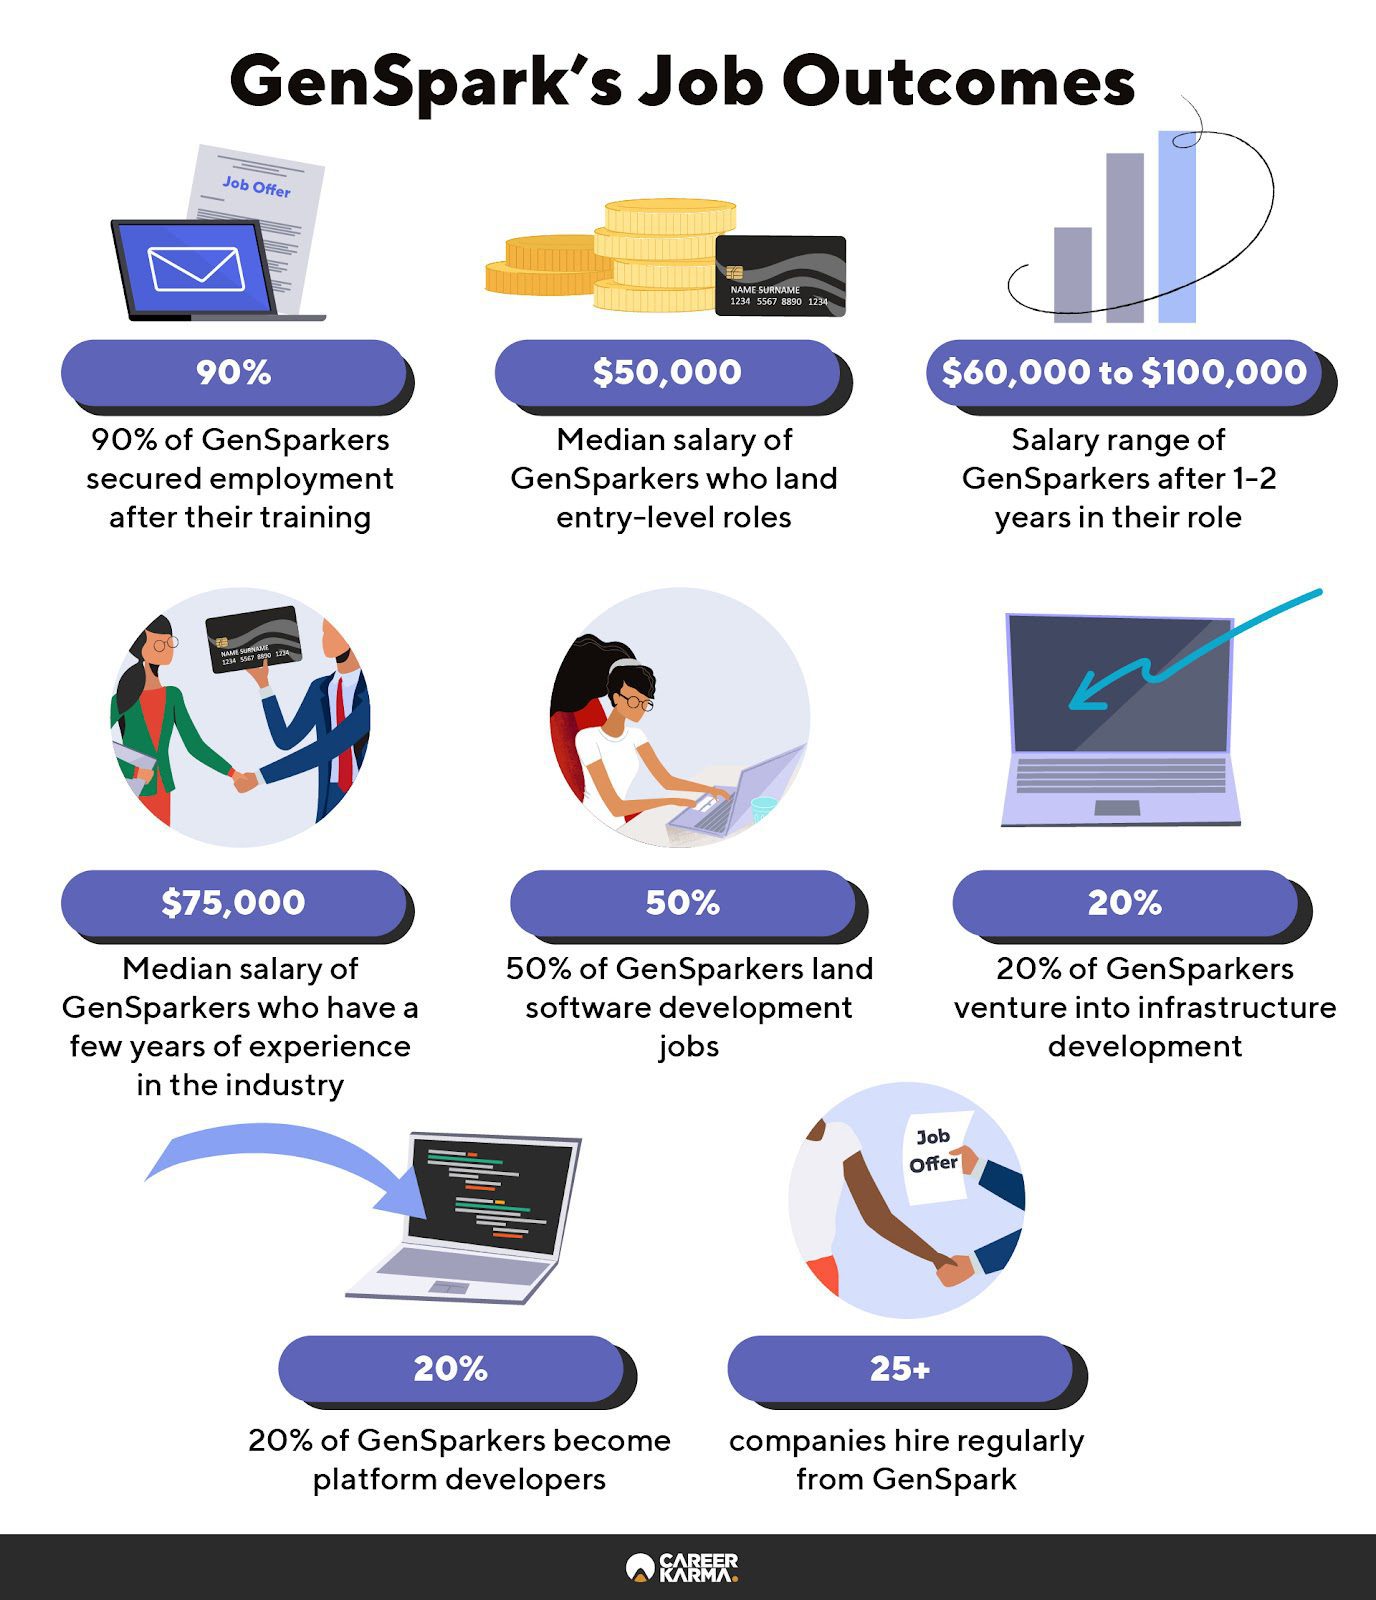 An infographic highlighting GenSpark’s job outcomes